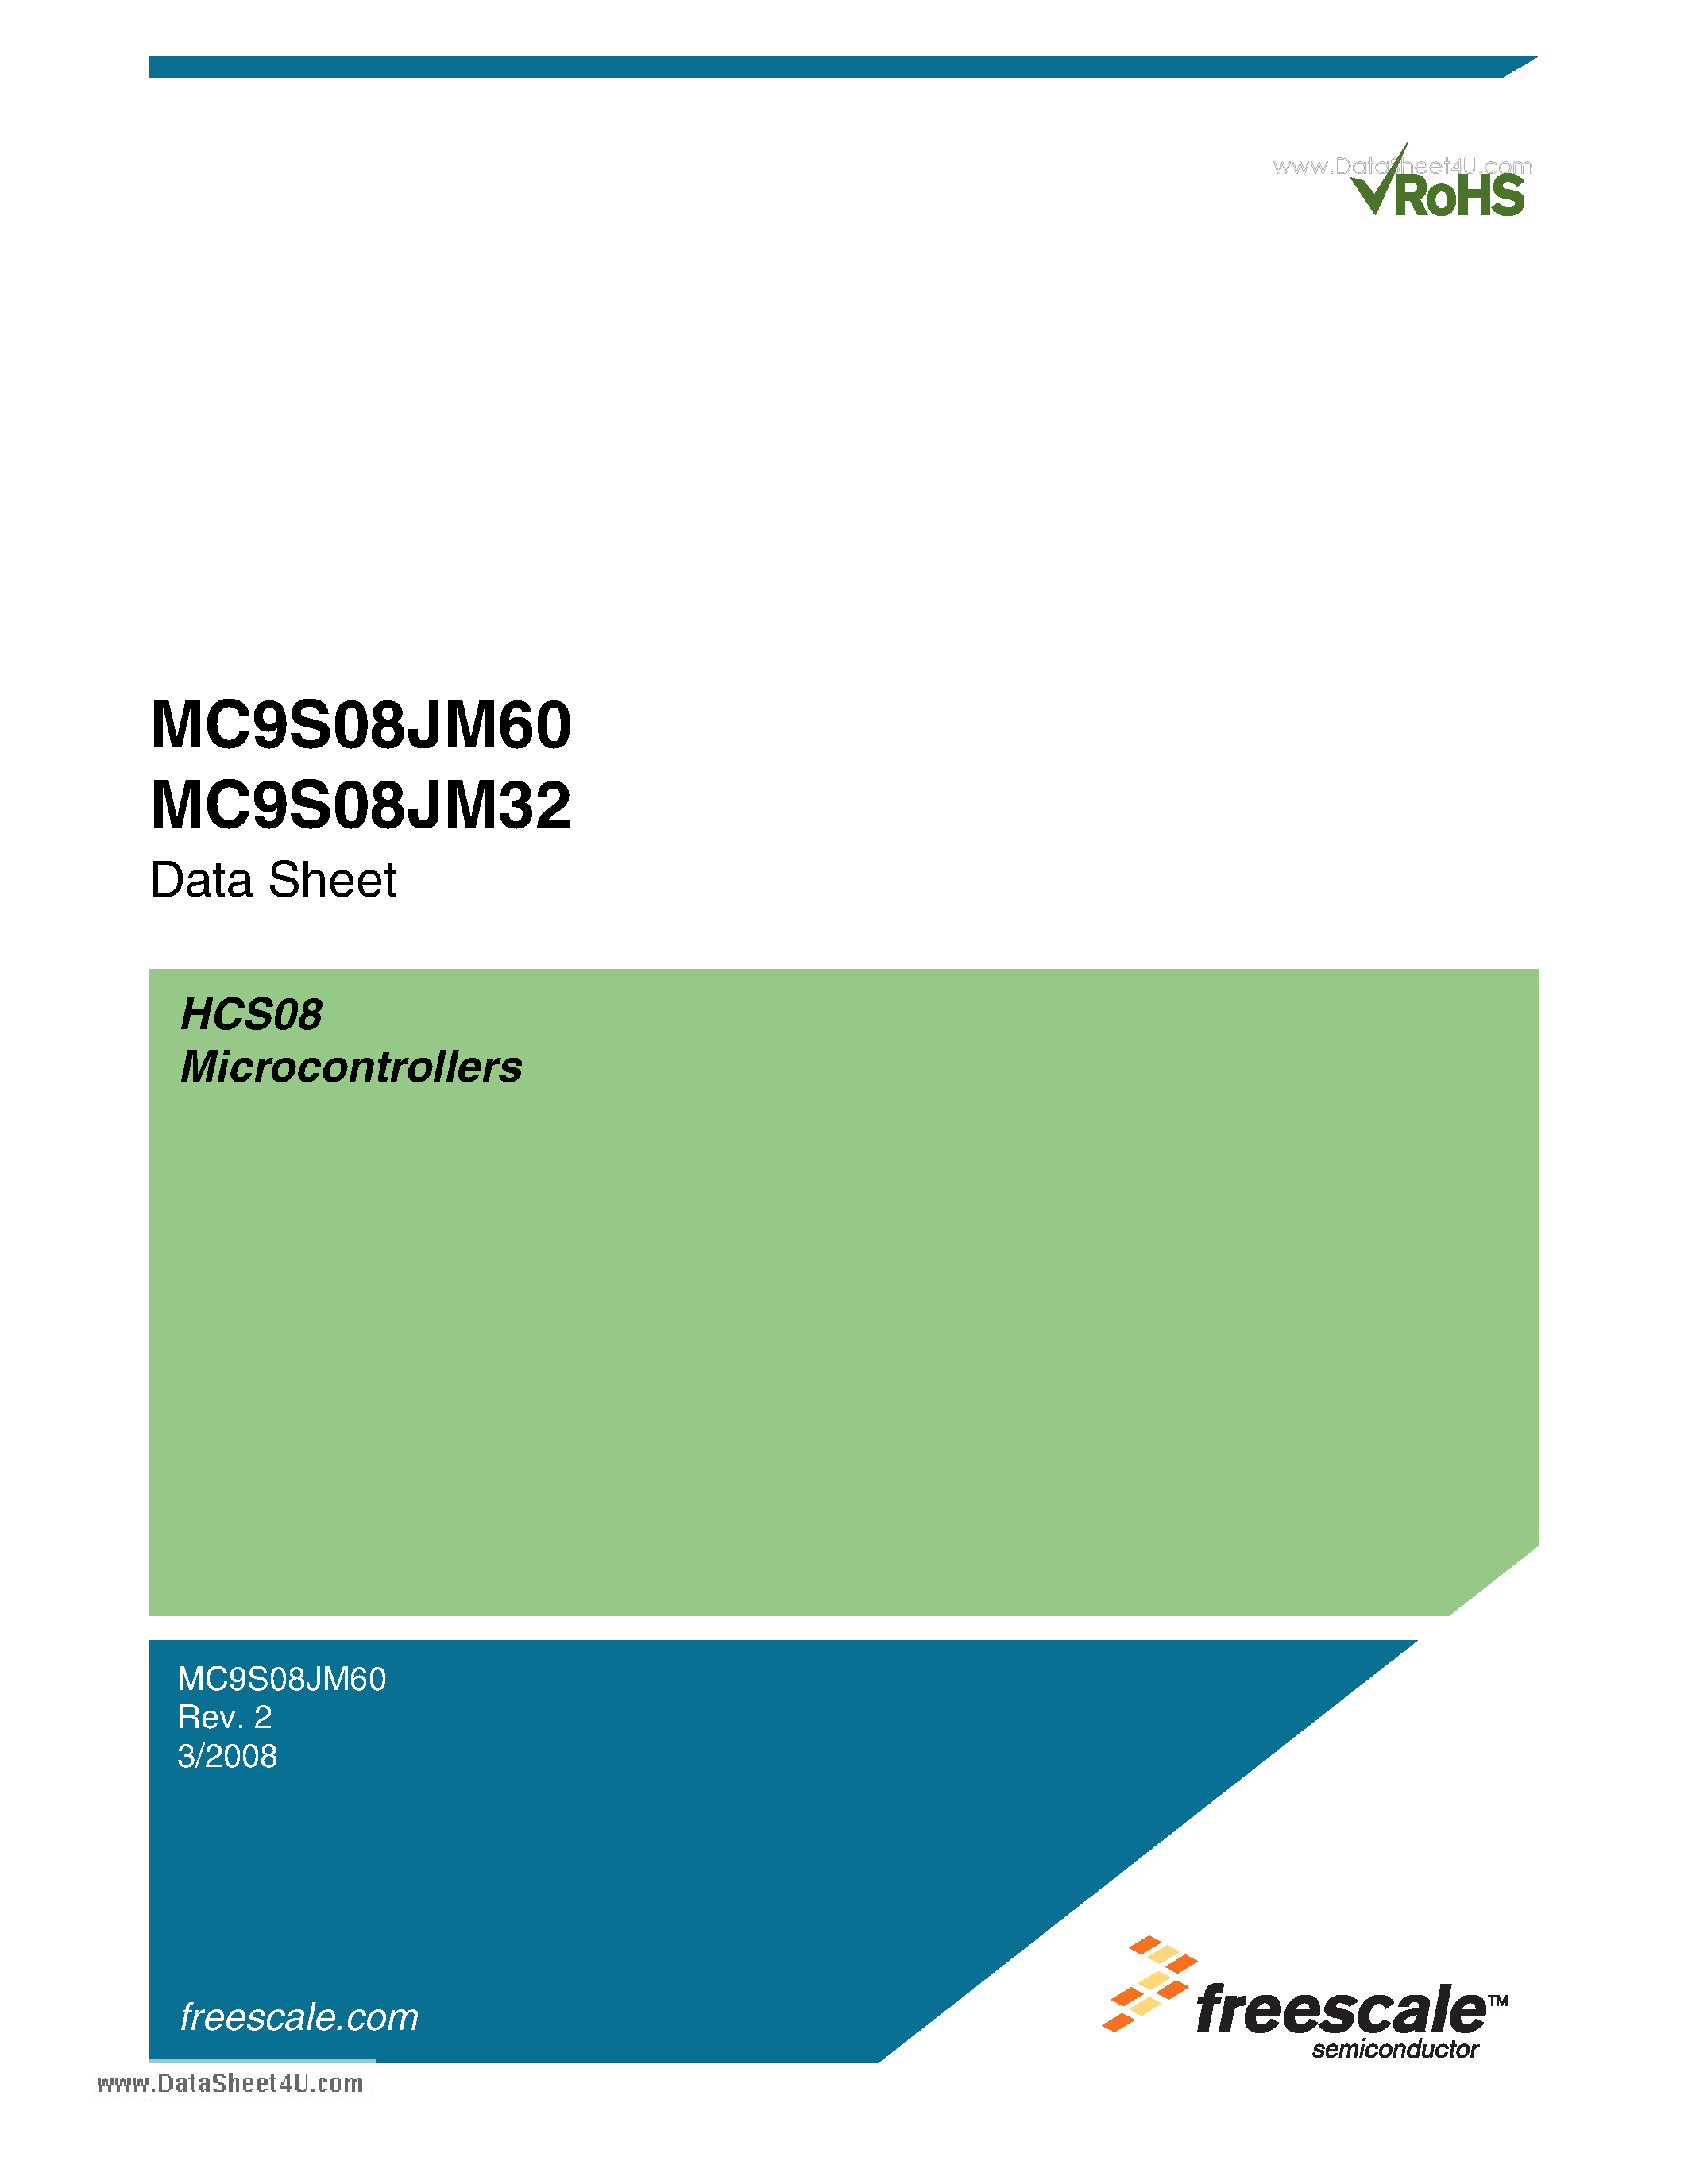 Datasheet MC9S08JM32 - (MC9S08JM32 / MC9S08JM60) Microcontrollers page 1